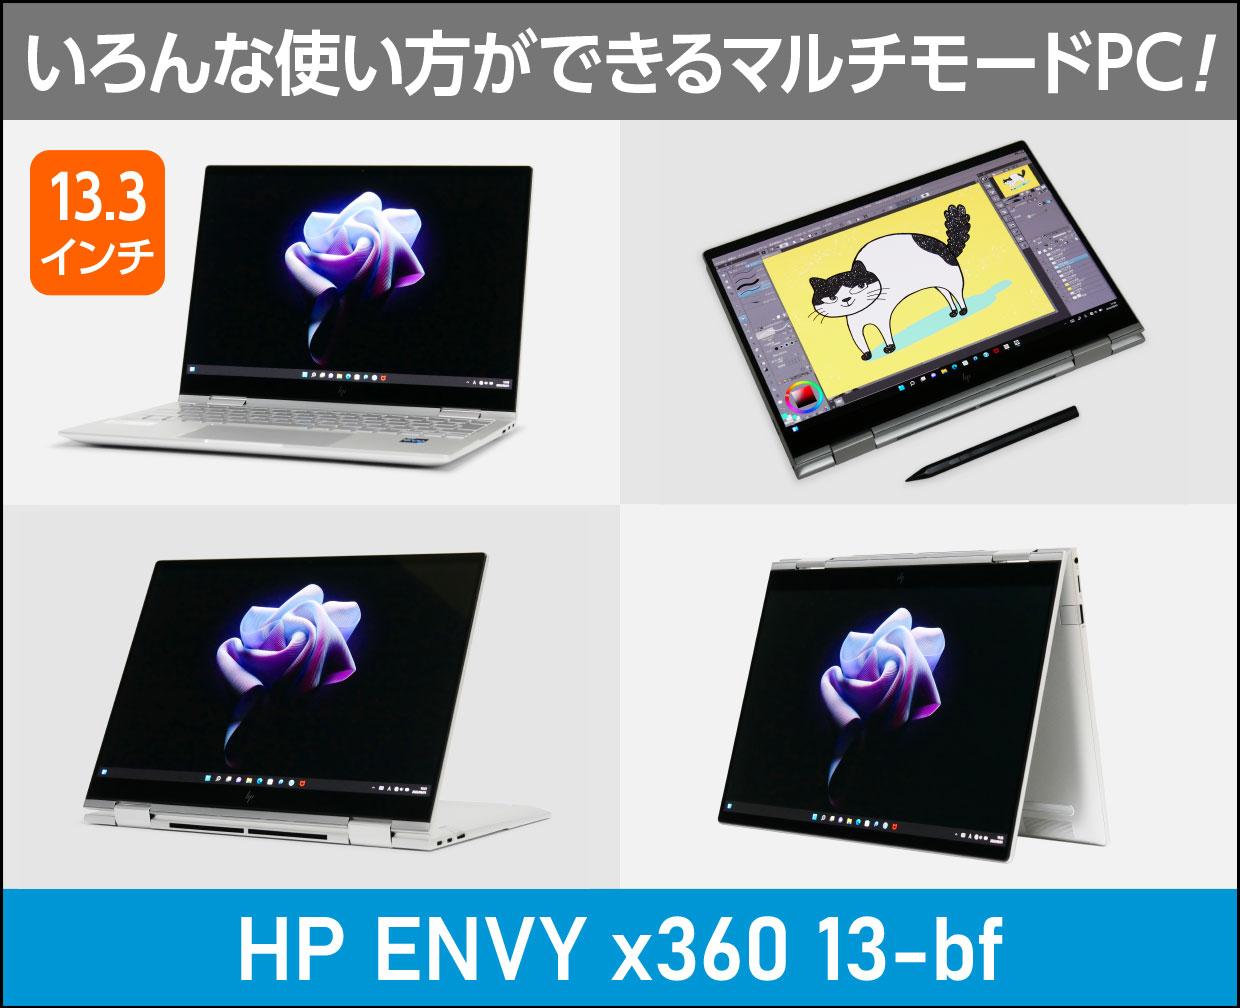 HP ENVY 13 x360 顔認証 タッチパネル式ノートパソコン